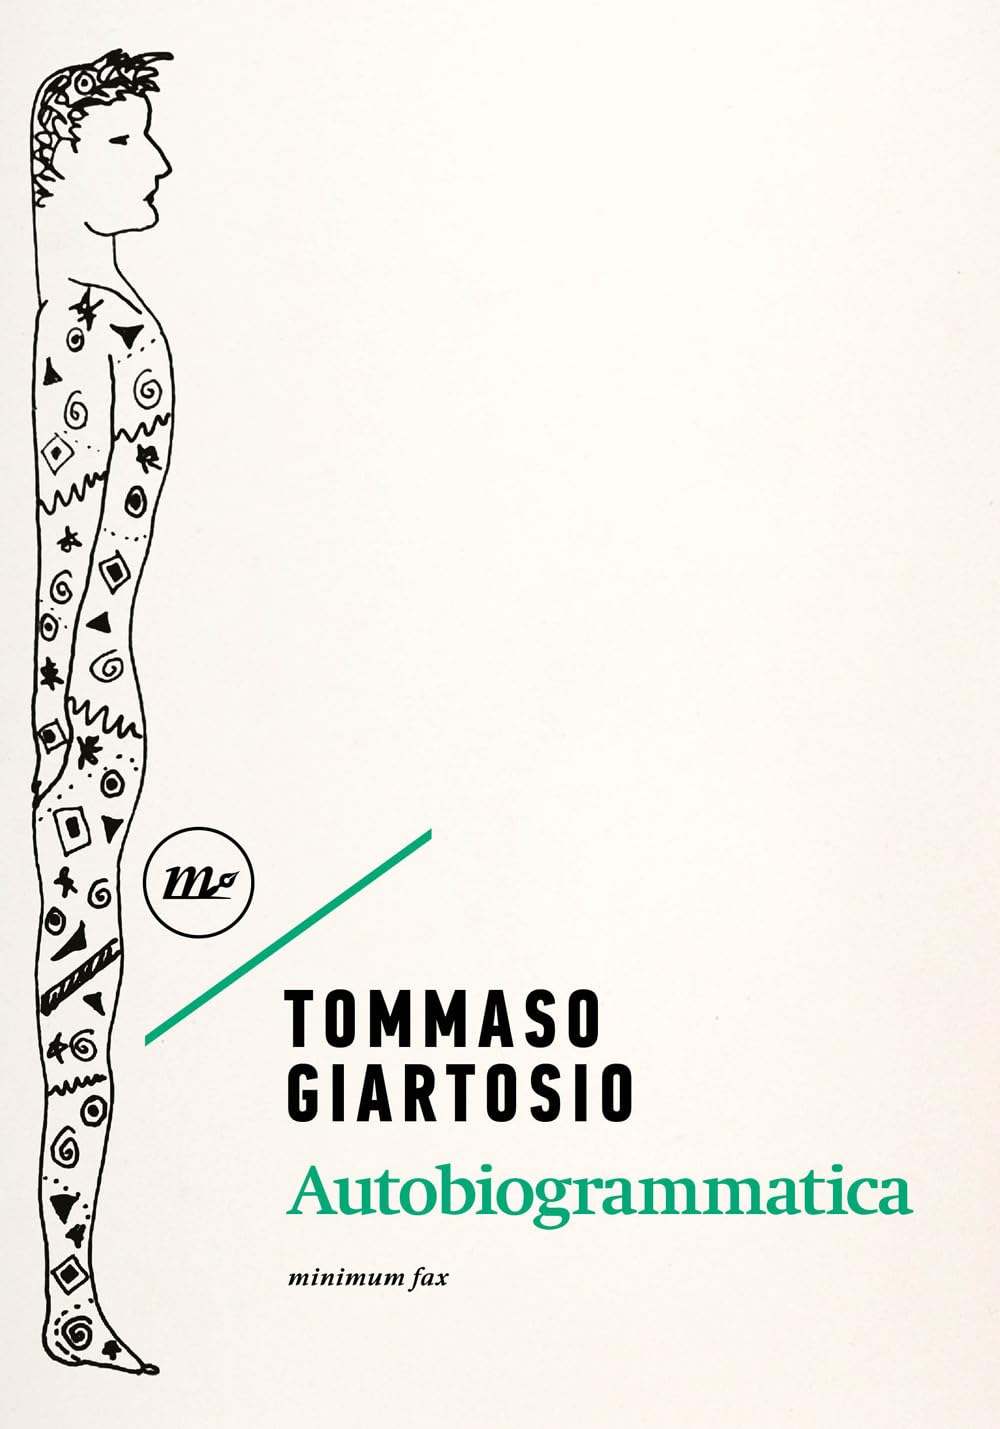 Tommaso Giartosio – Autobiogrammatica